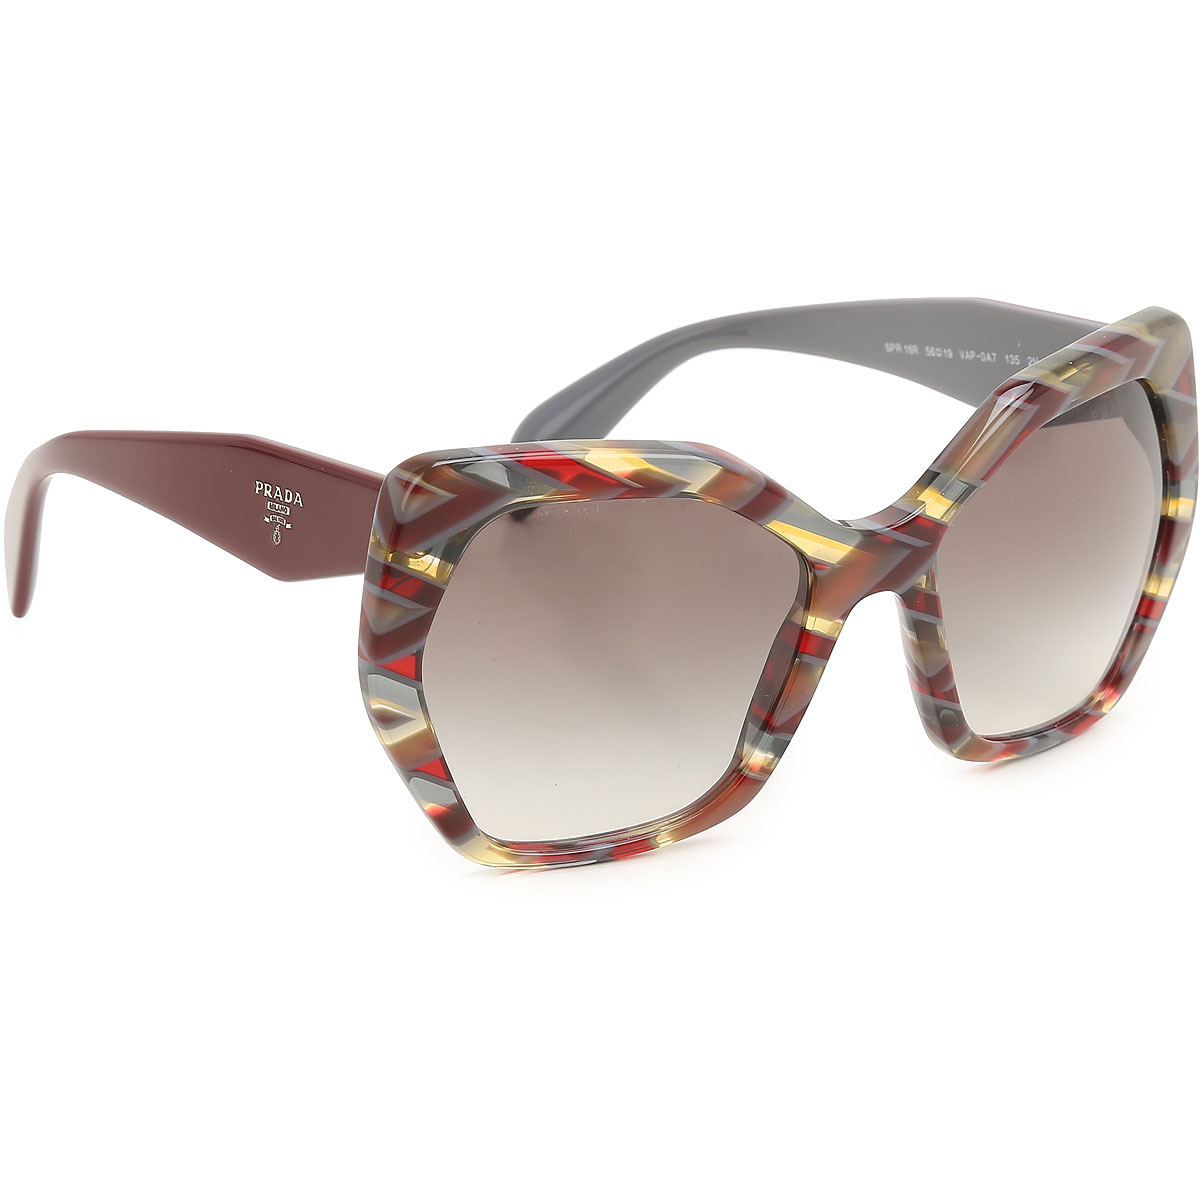 Sunglasses Prada, Style code: spr16r-van-9k1